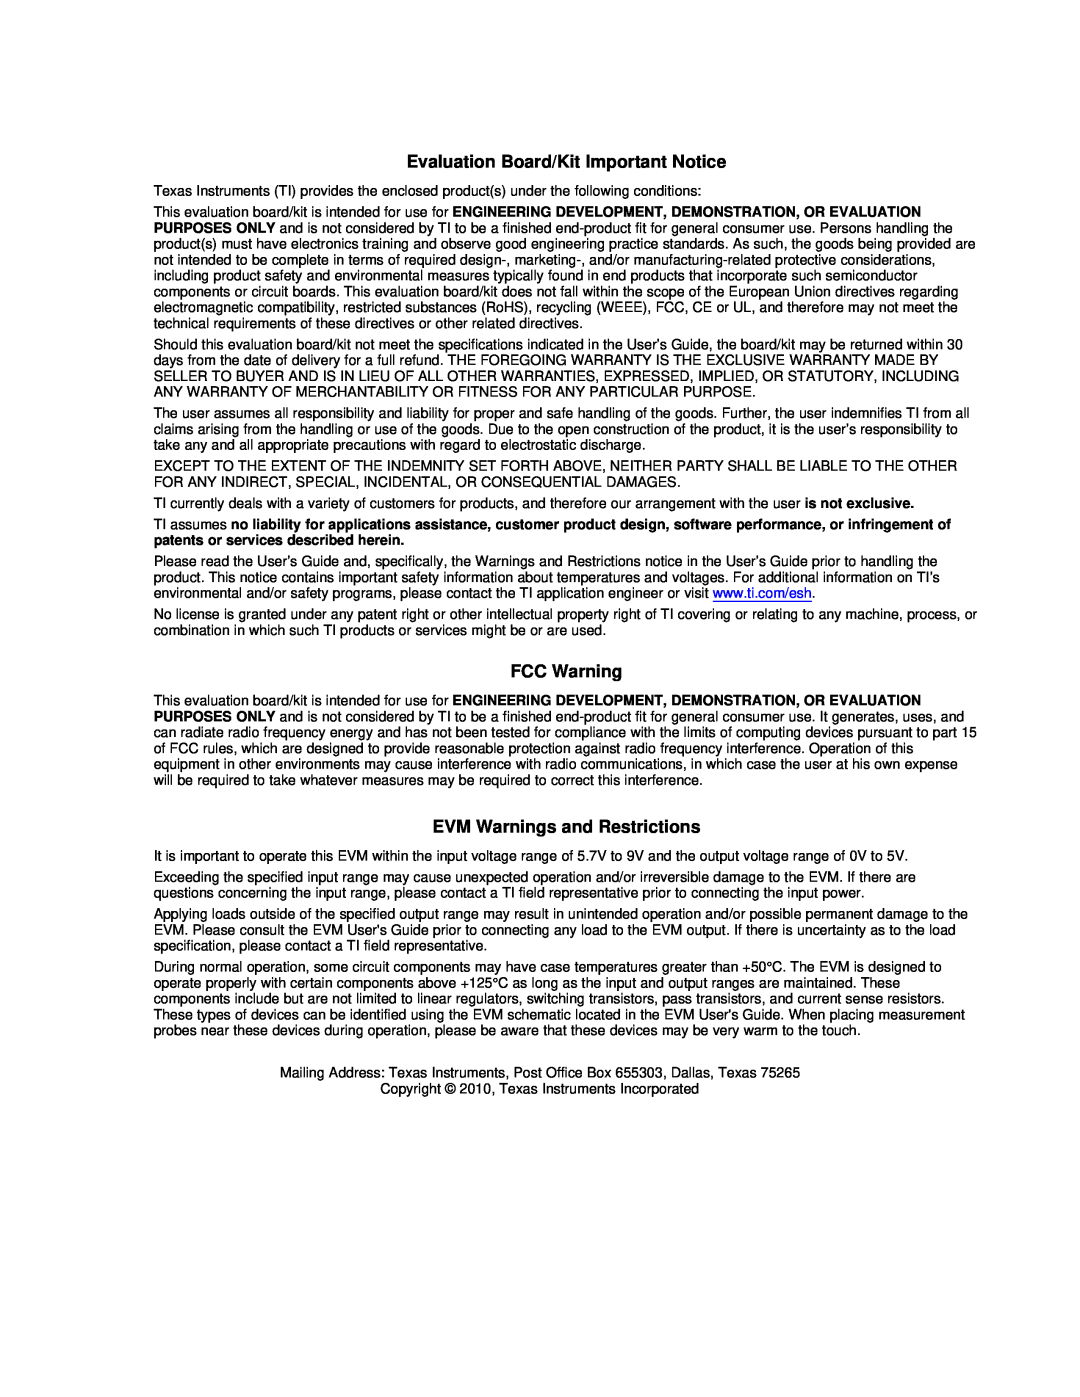 Texas Instruments PGA309EVM-USB manual Evaluation Board/Kit Important Notice, FCC Warning, EVM Warnings and Restrictions 